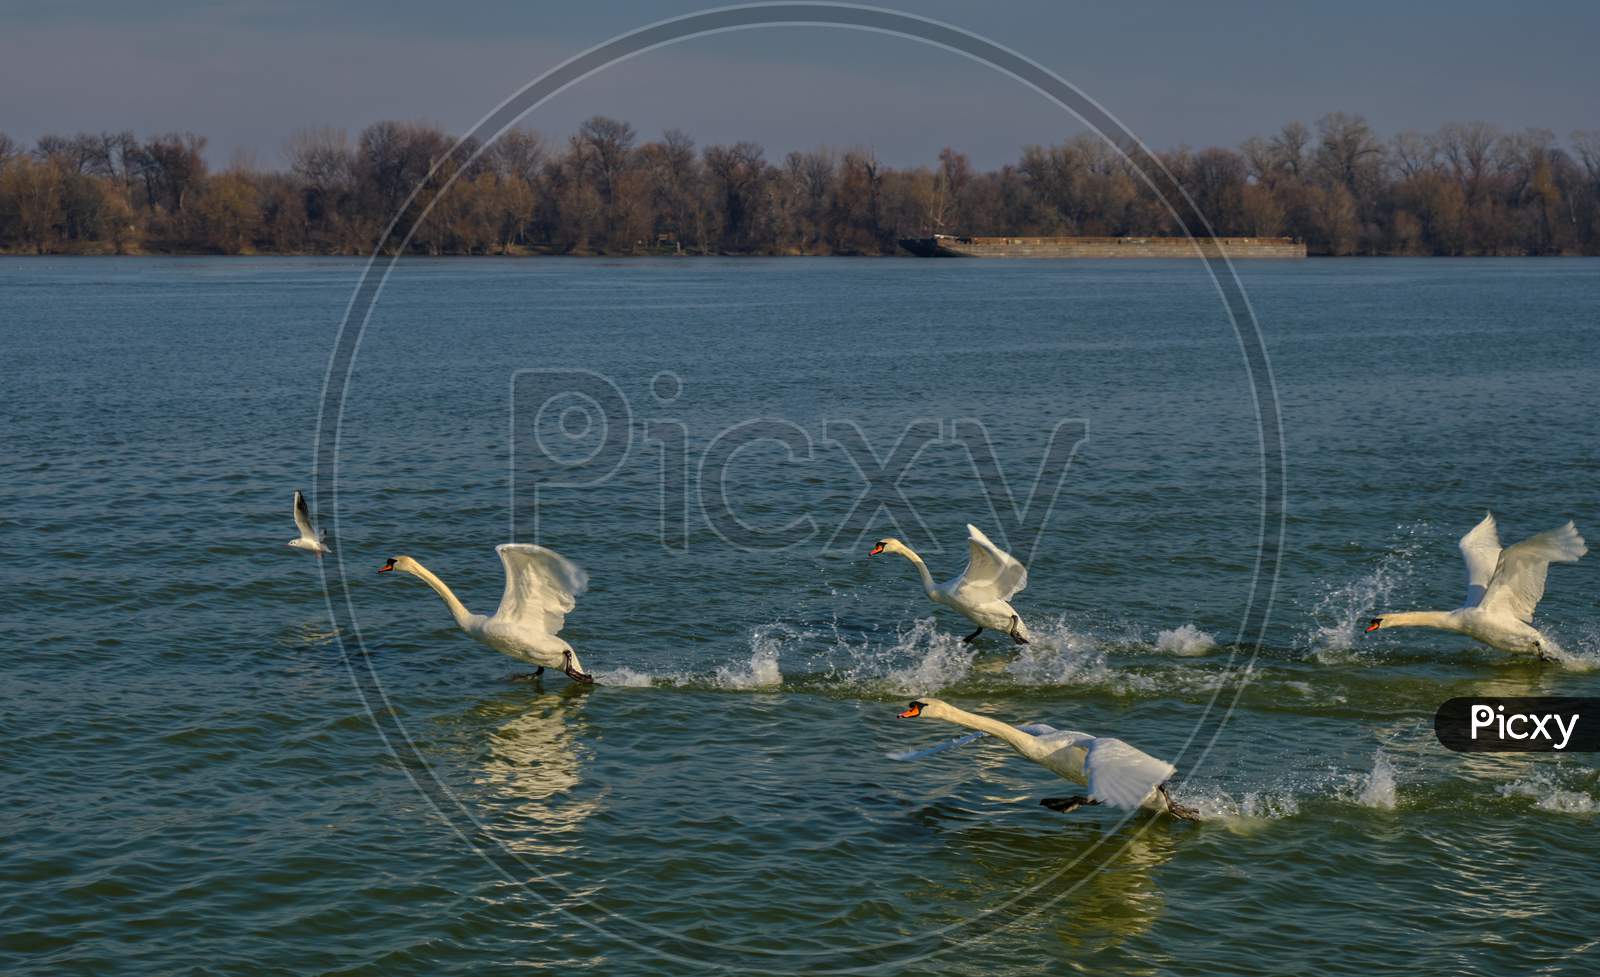 White Swans Taking Flight From The Danube River In Belgrade, Serbia